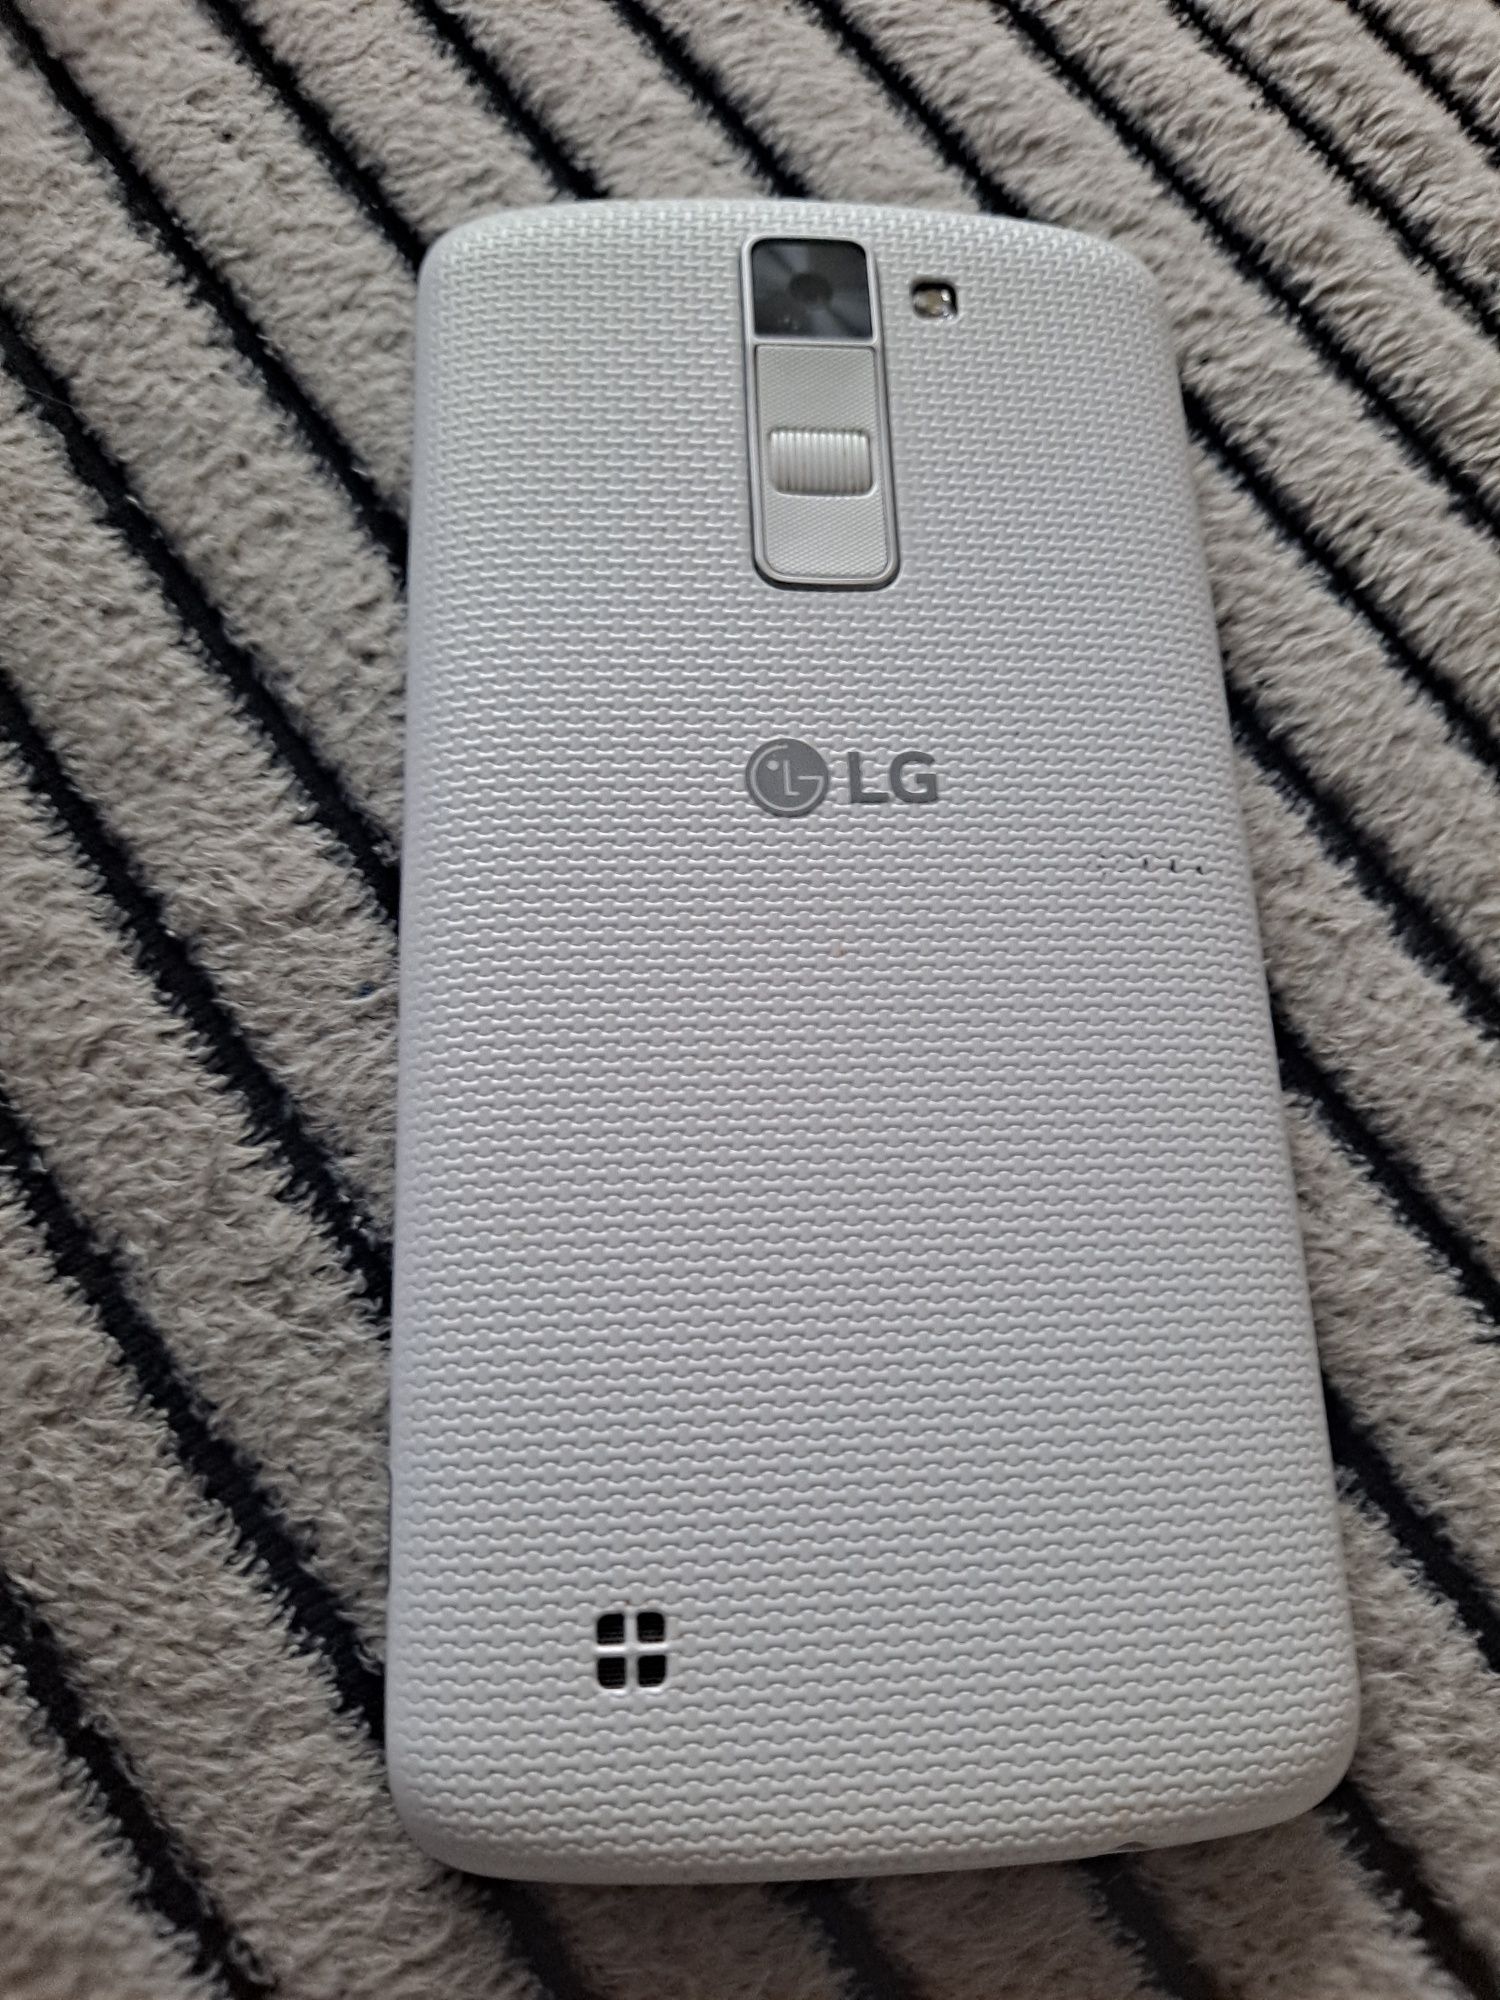 Telegon LG K8 dual sim